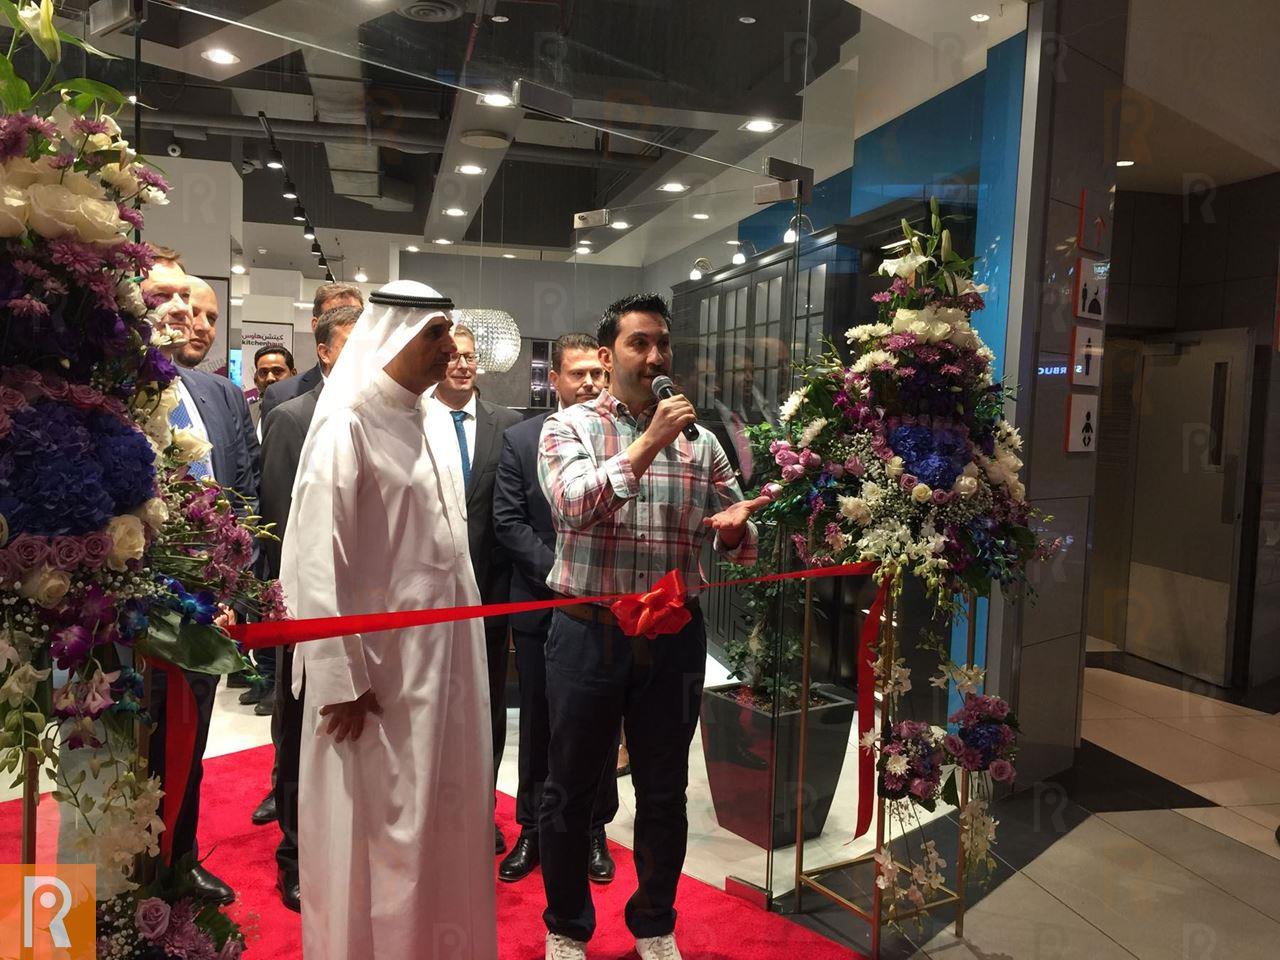 KITCHENHAUS™ Now Open in Avenues Mall in Kuwait by Alshaya Enterprises™